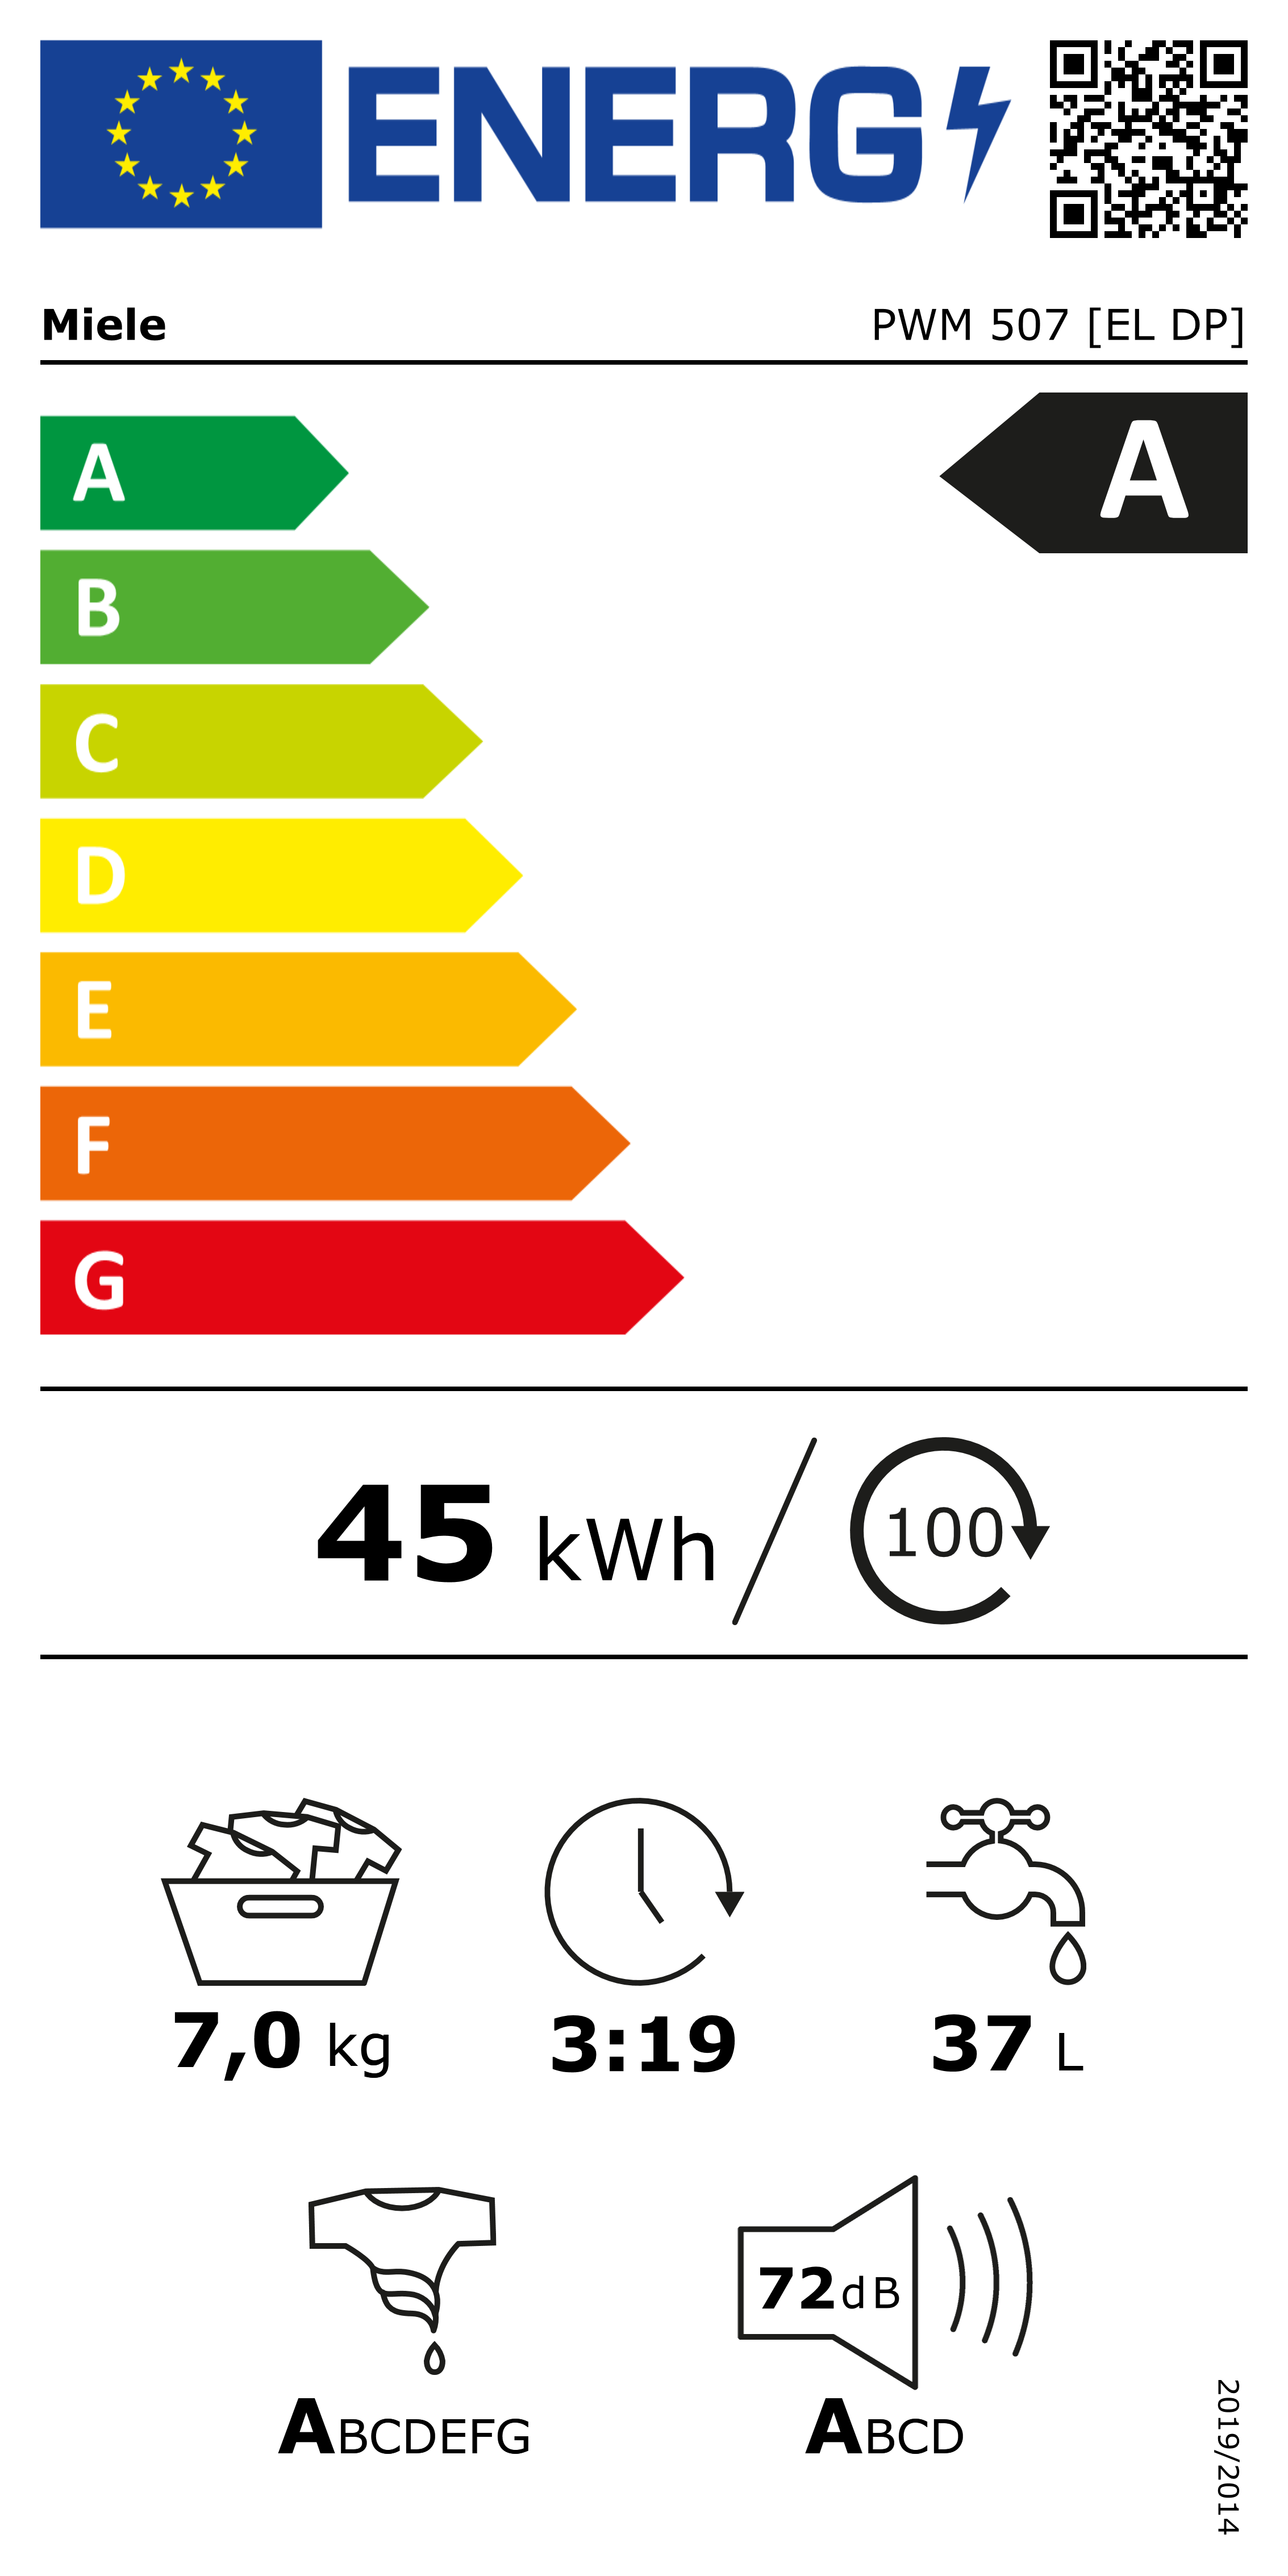 PWM 507 [EL DP] Produktbild Energysaving energysaving